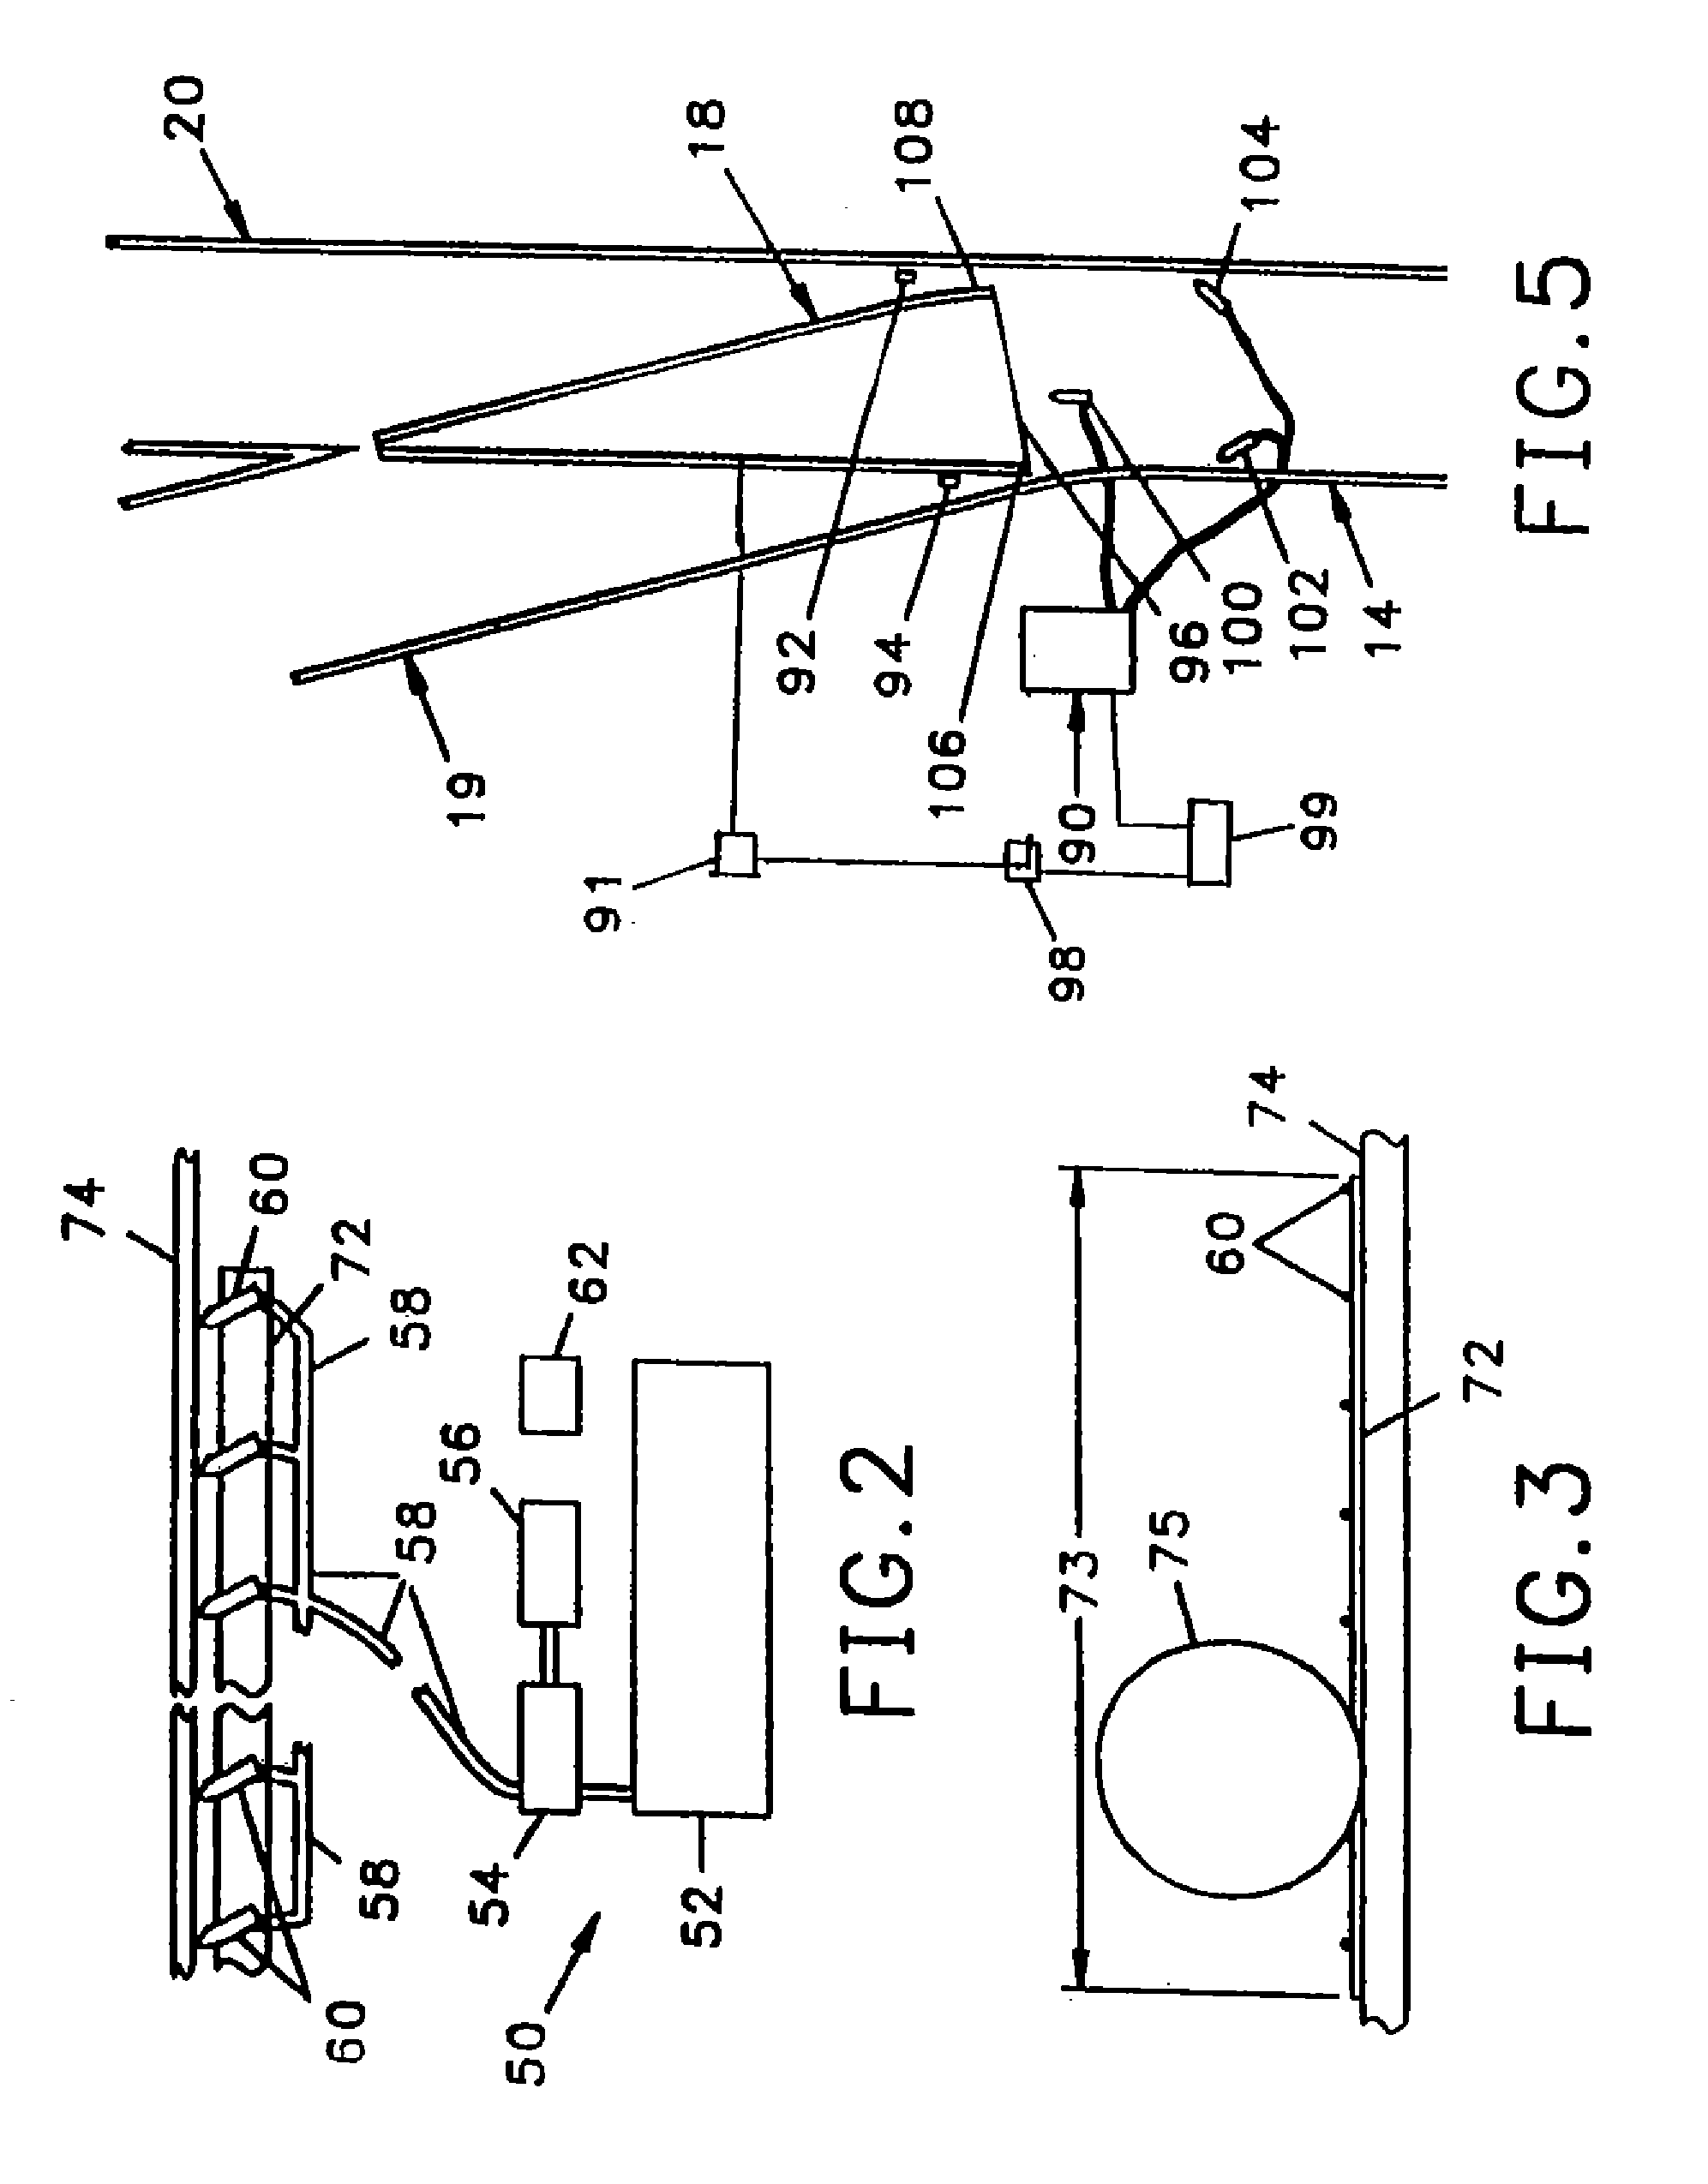 Railroad track de-icing method and apparatus